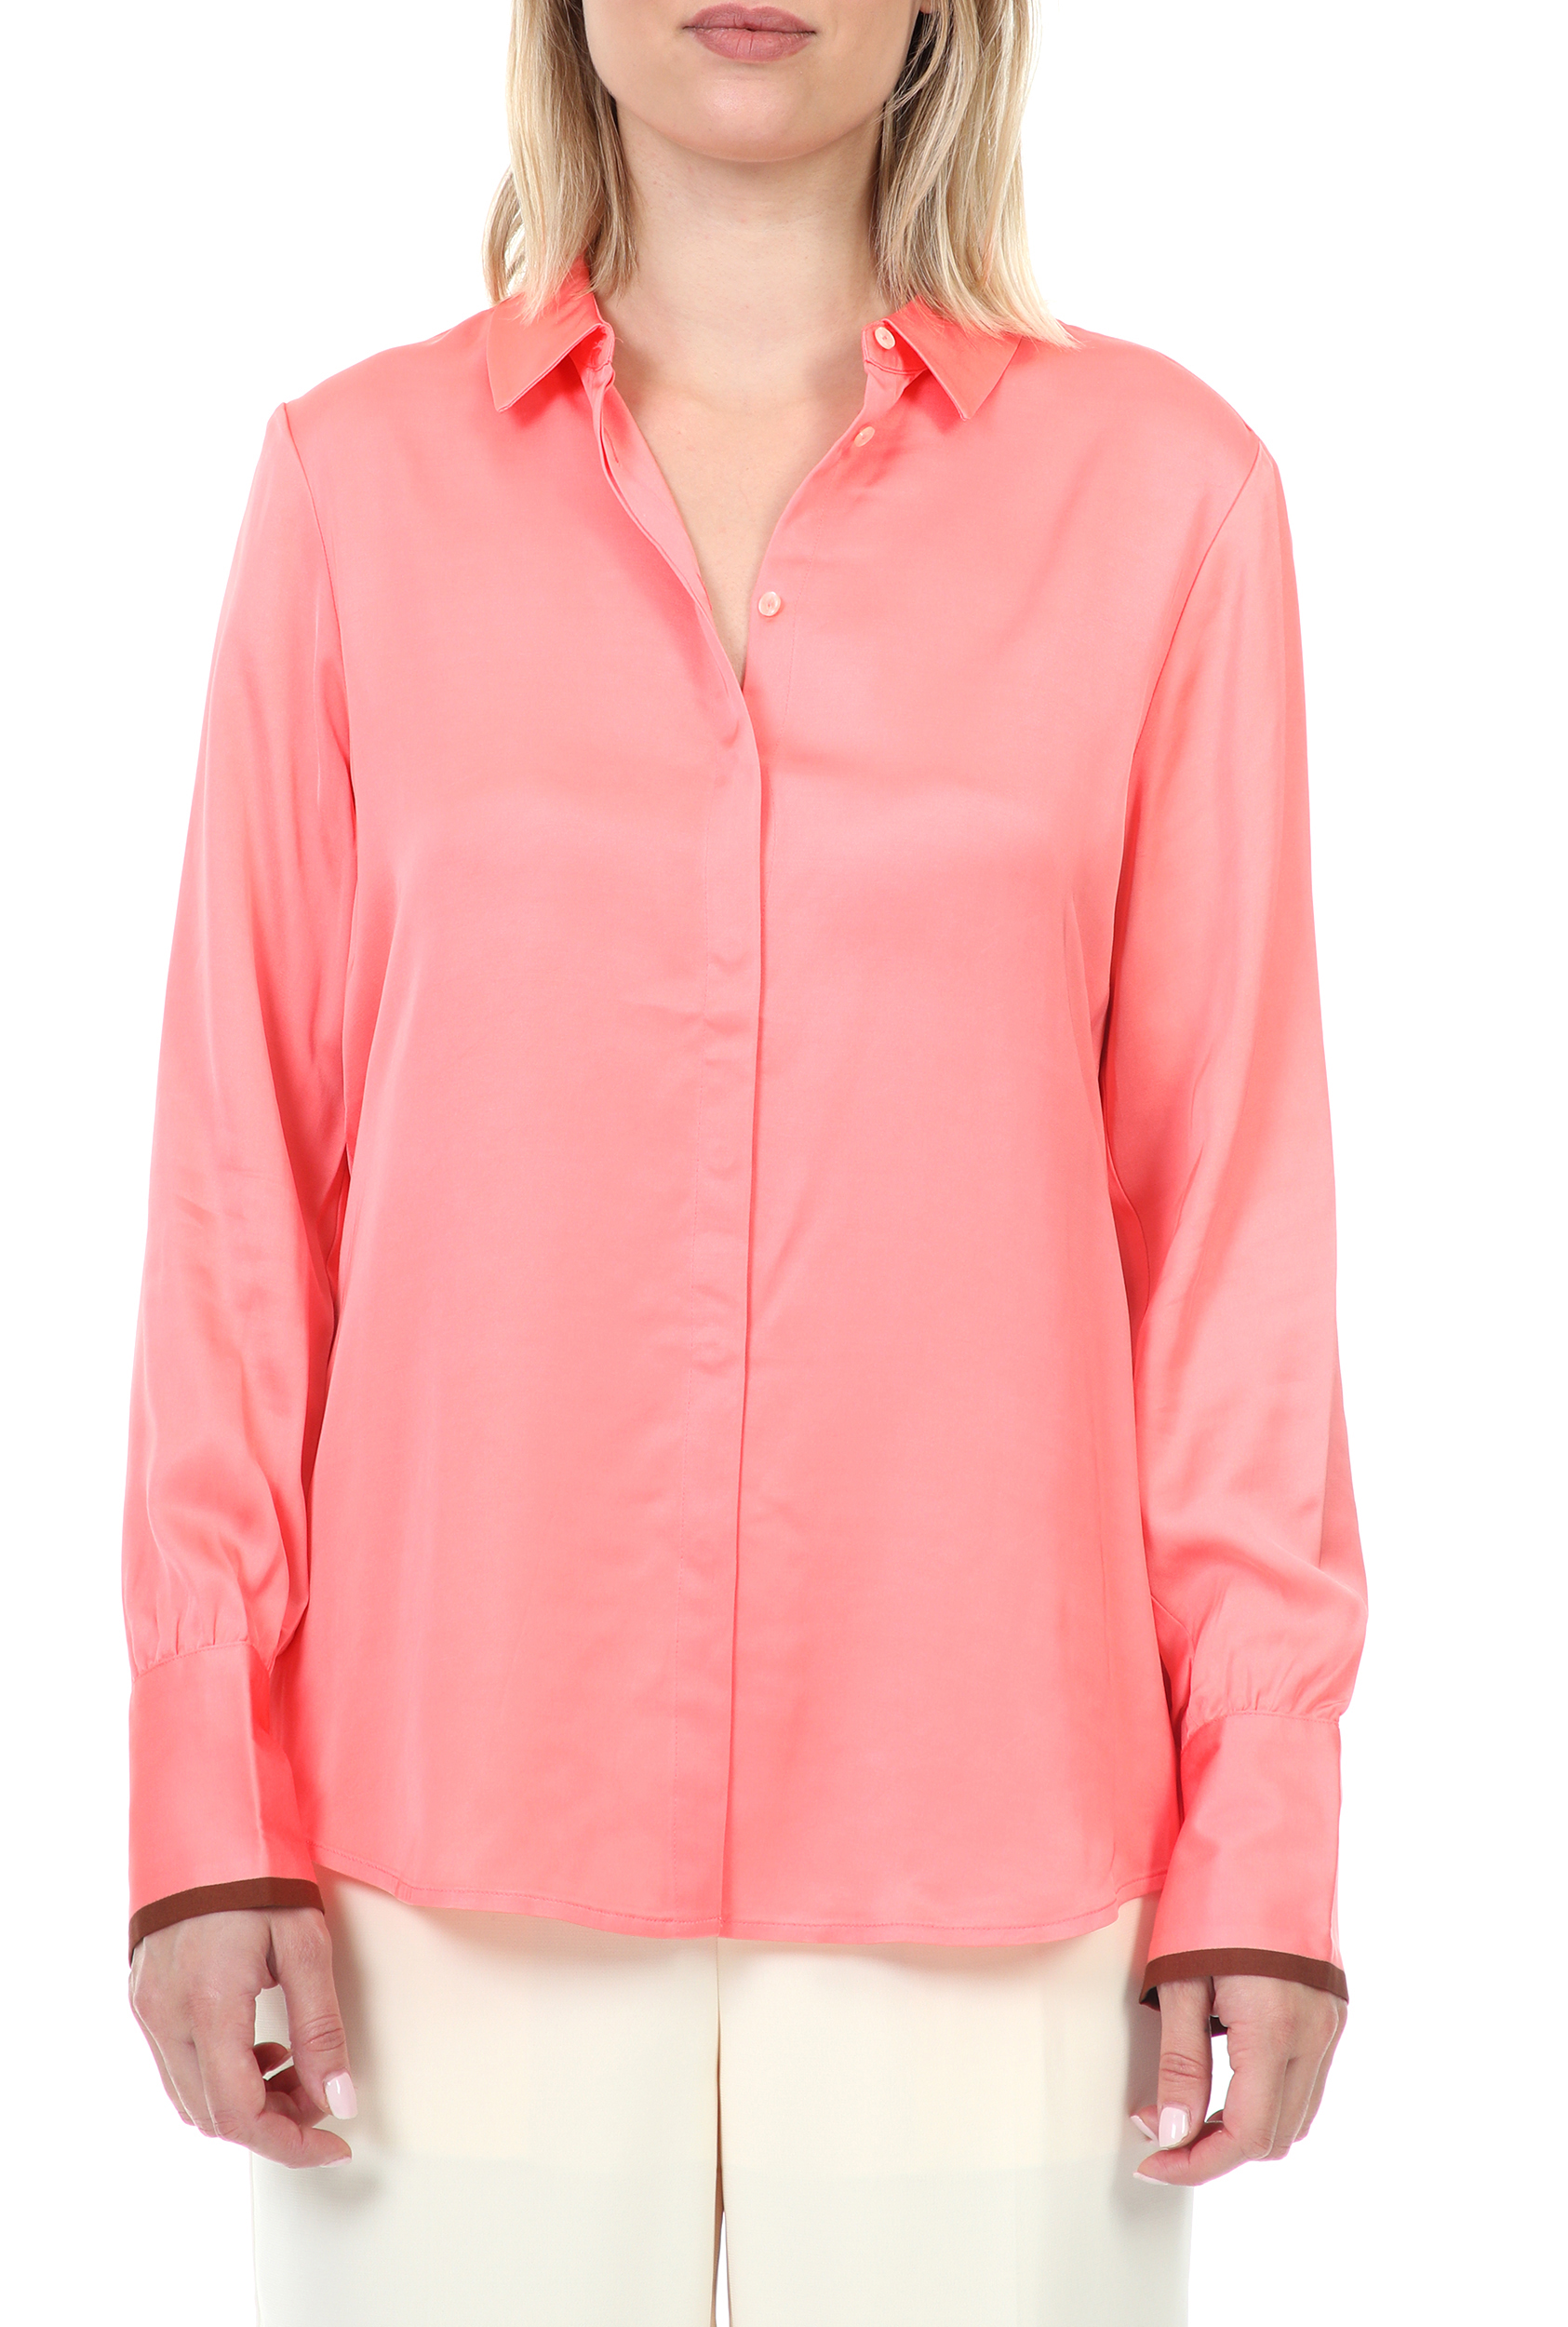 SCOTCH & SODA SCOTCH & SODA - Γυναικείο πουκάμισο SCOTCH & SODA ροζ